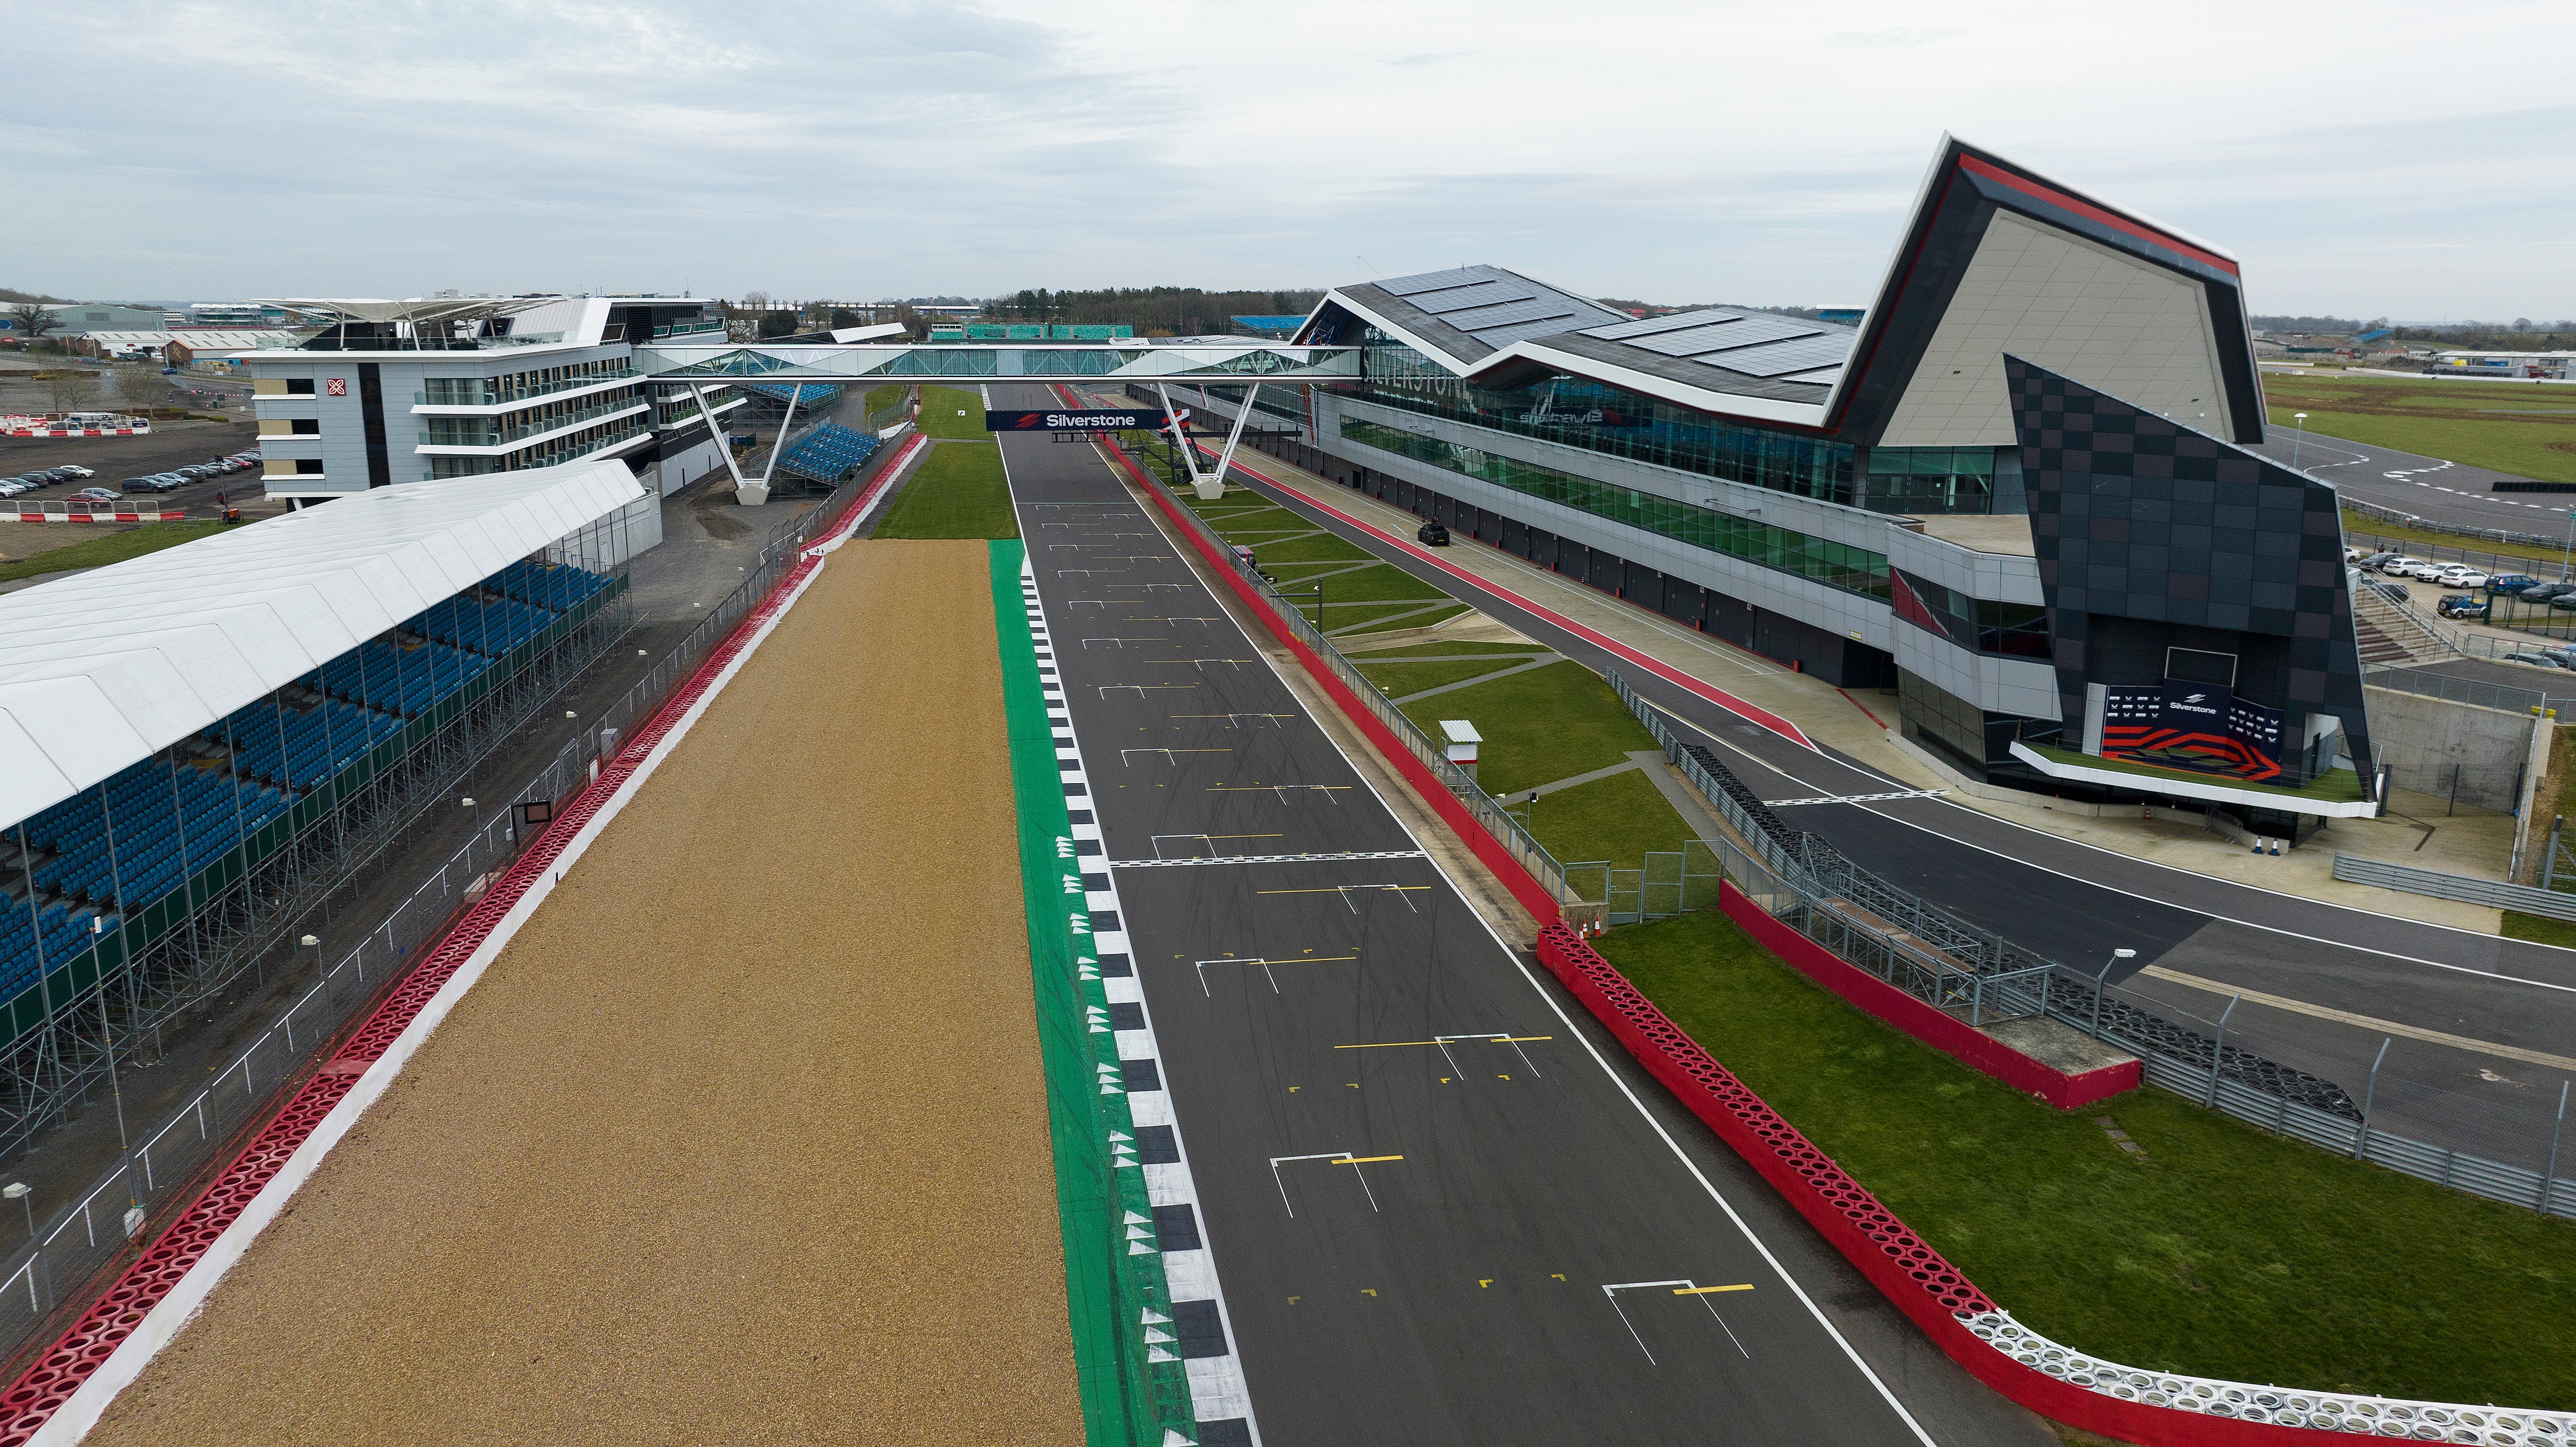 Silverstone hosts the British Grand Prix